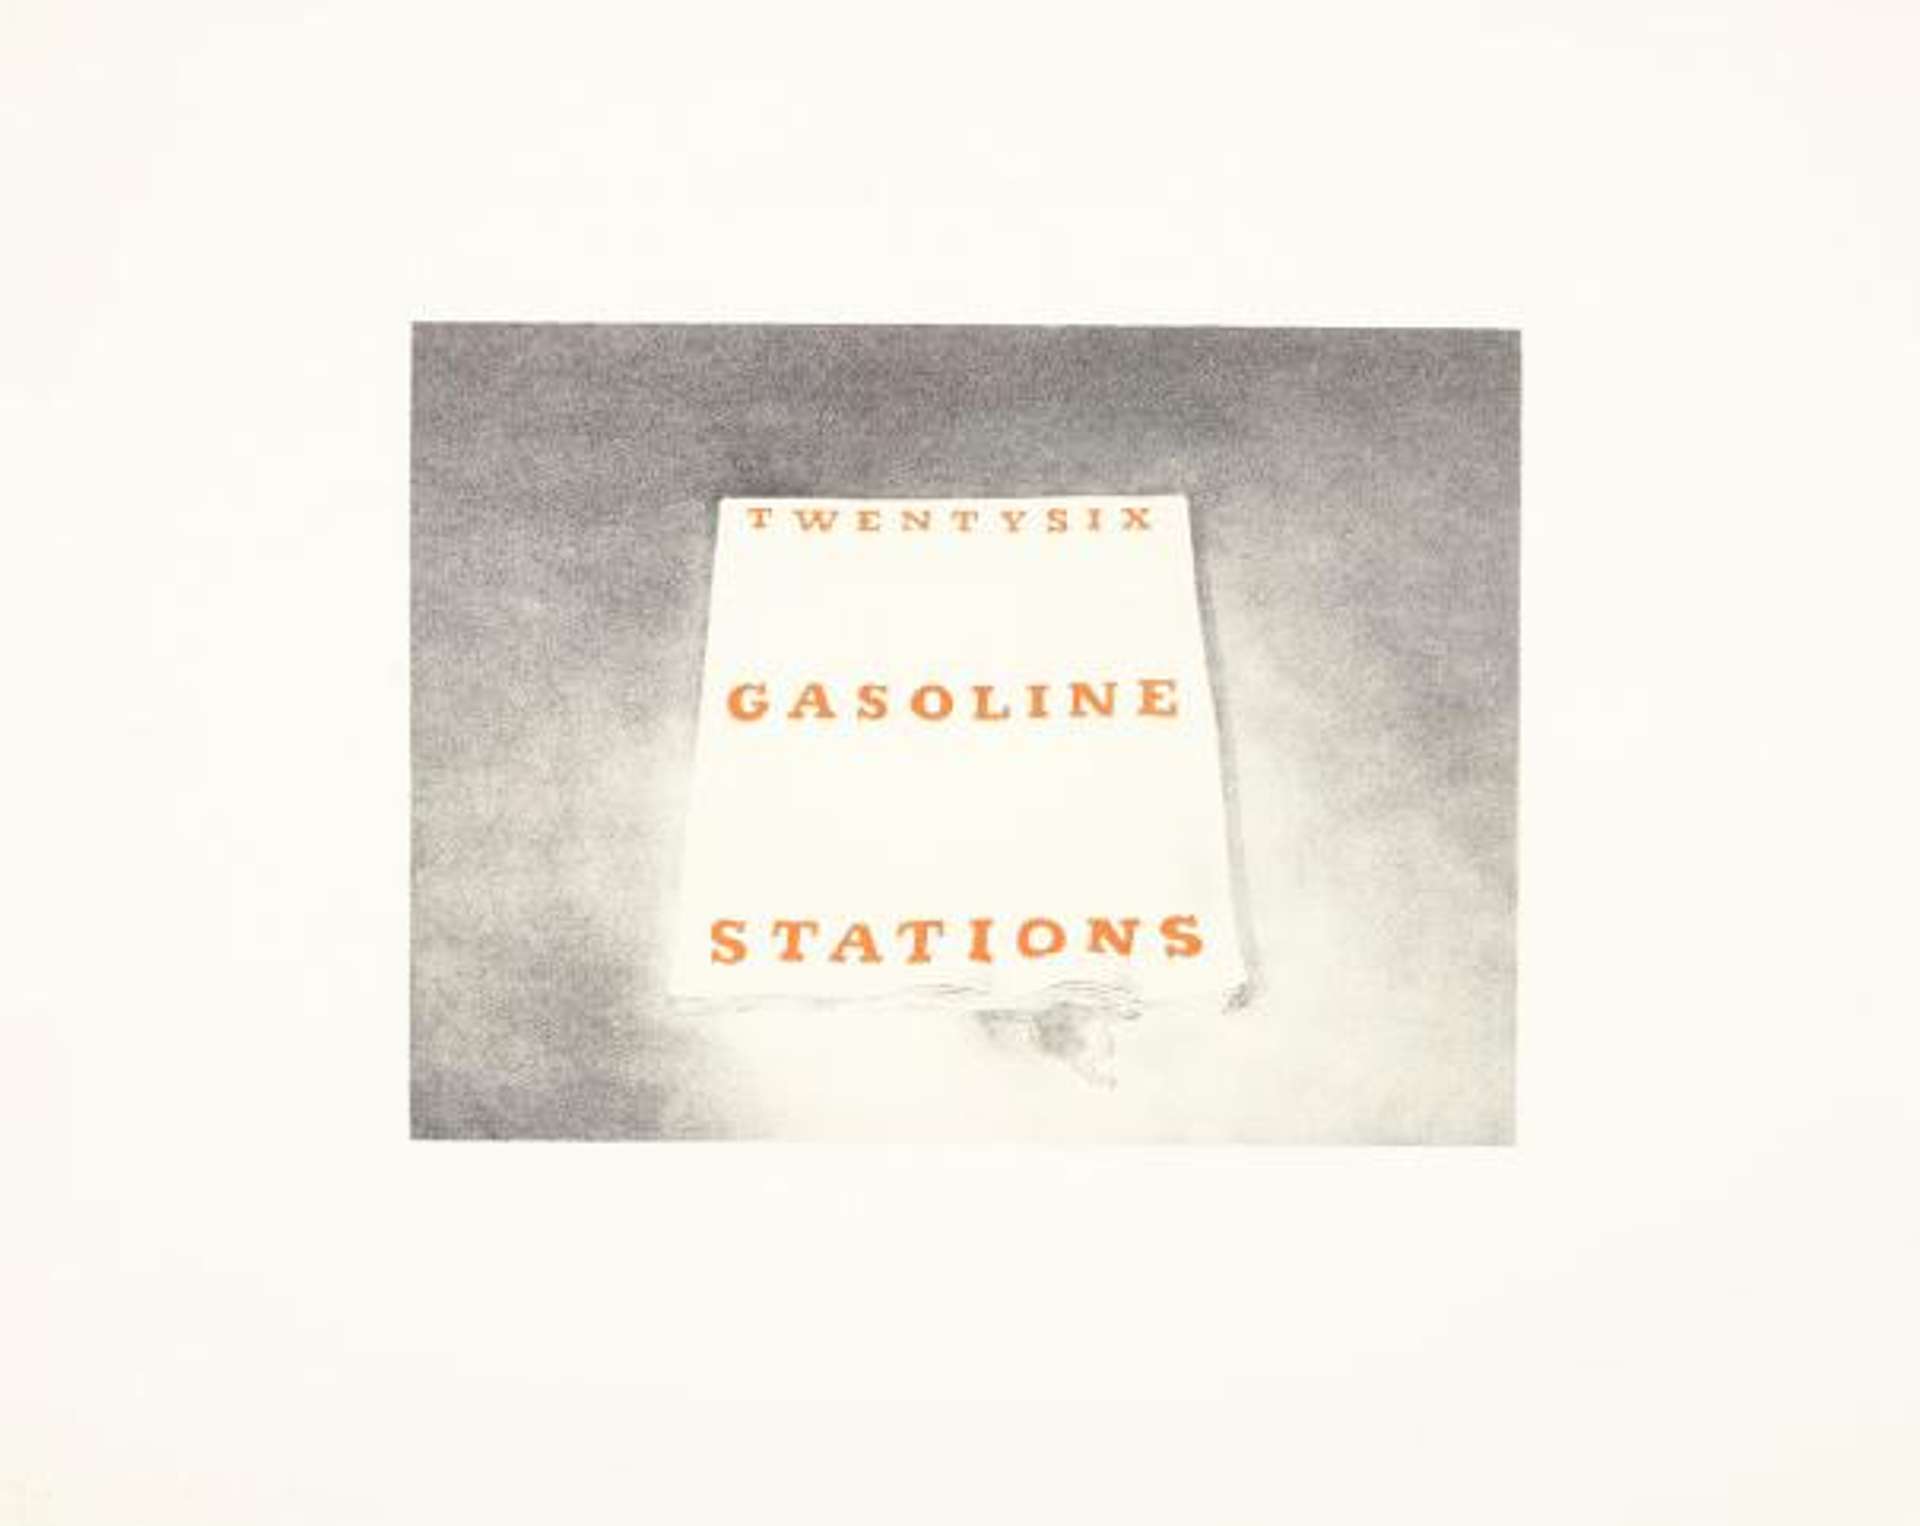 Twentysix Gasoline Stations, Book Cover - Signed Print by Ed Ruscha 1970 - MyArtBroker